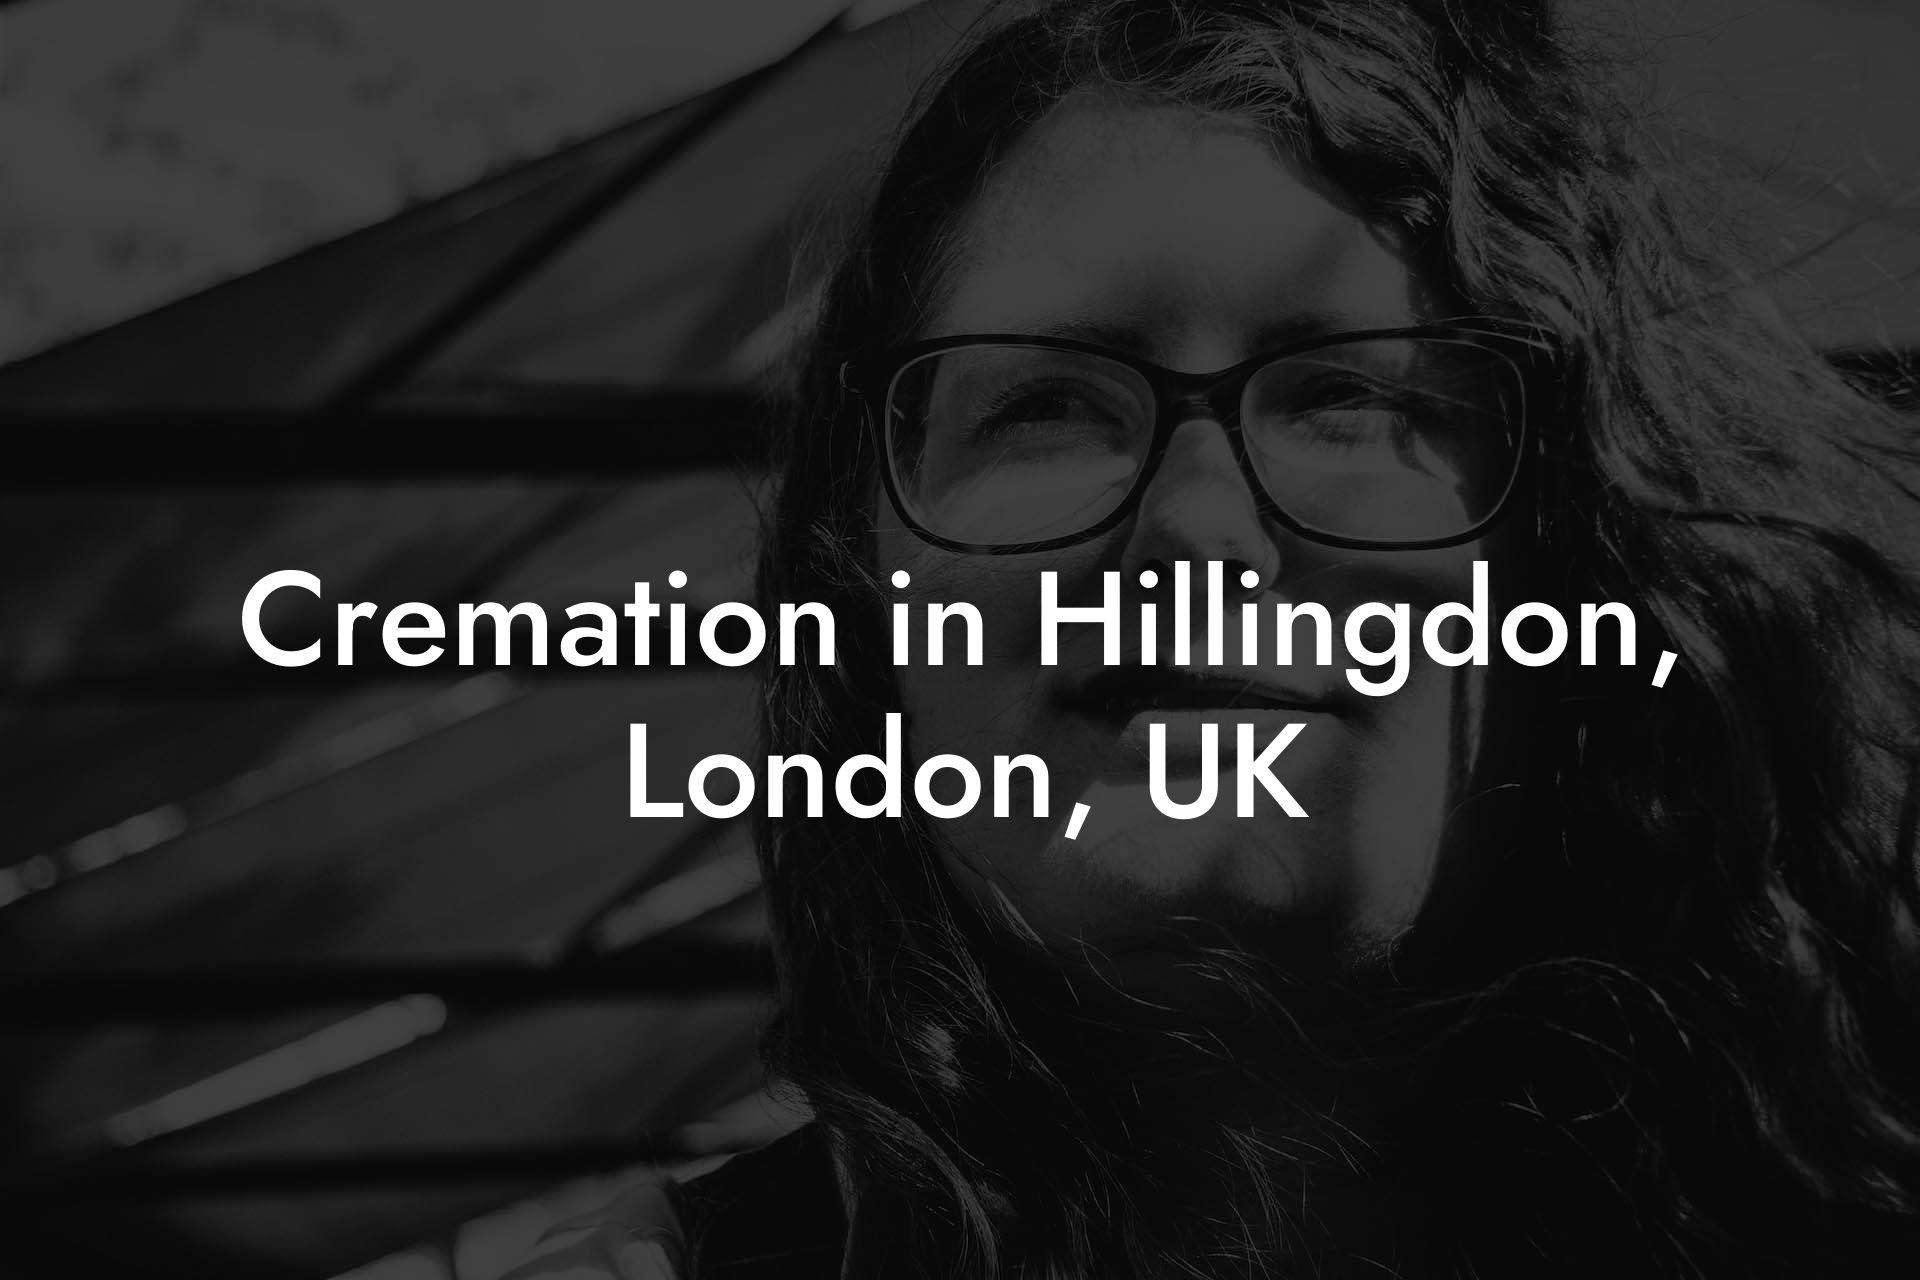 Cremation in Hillingdon, London, UK